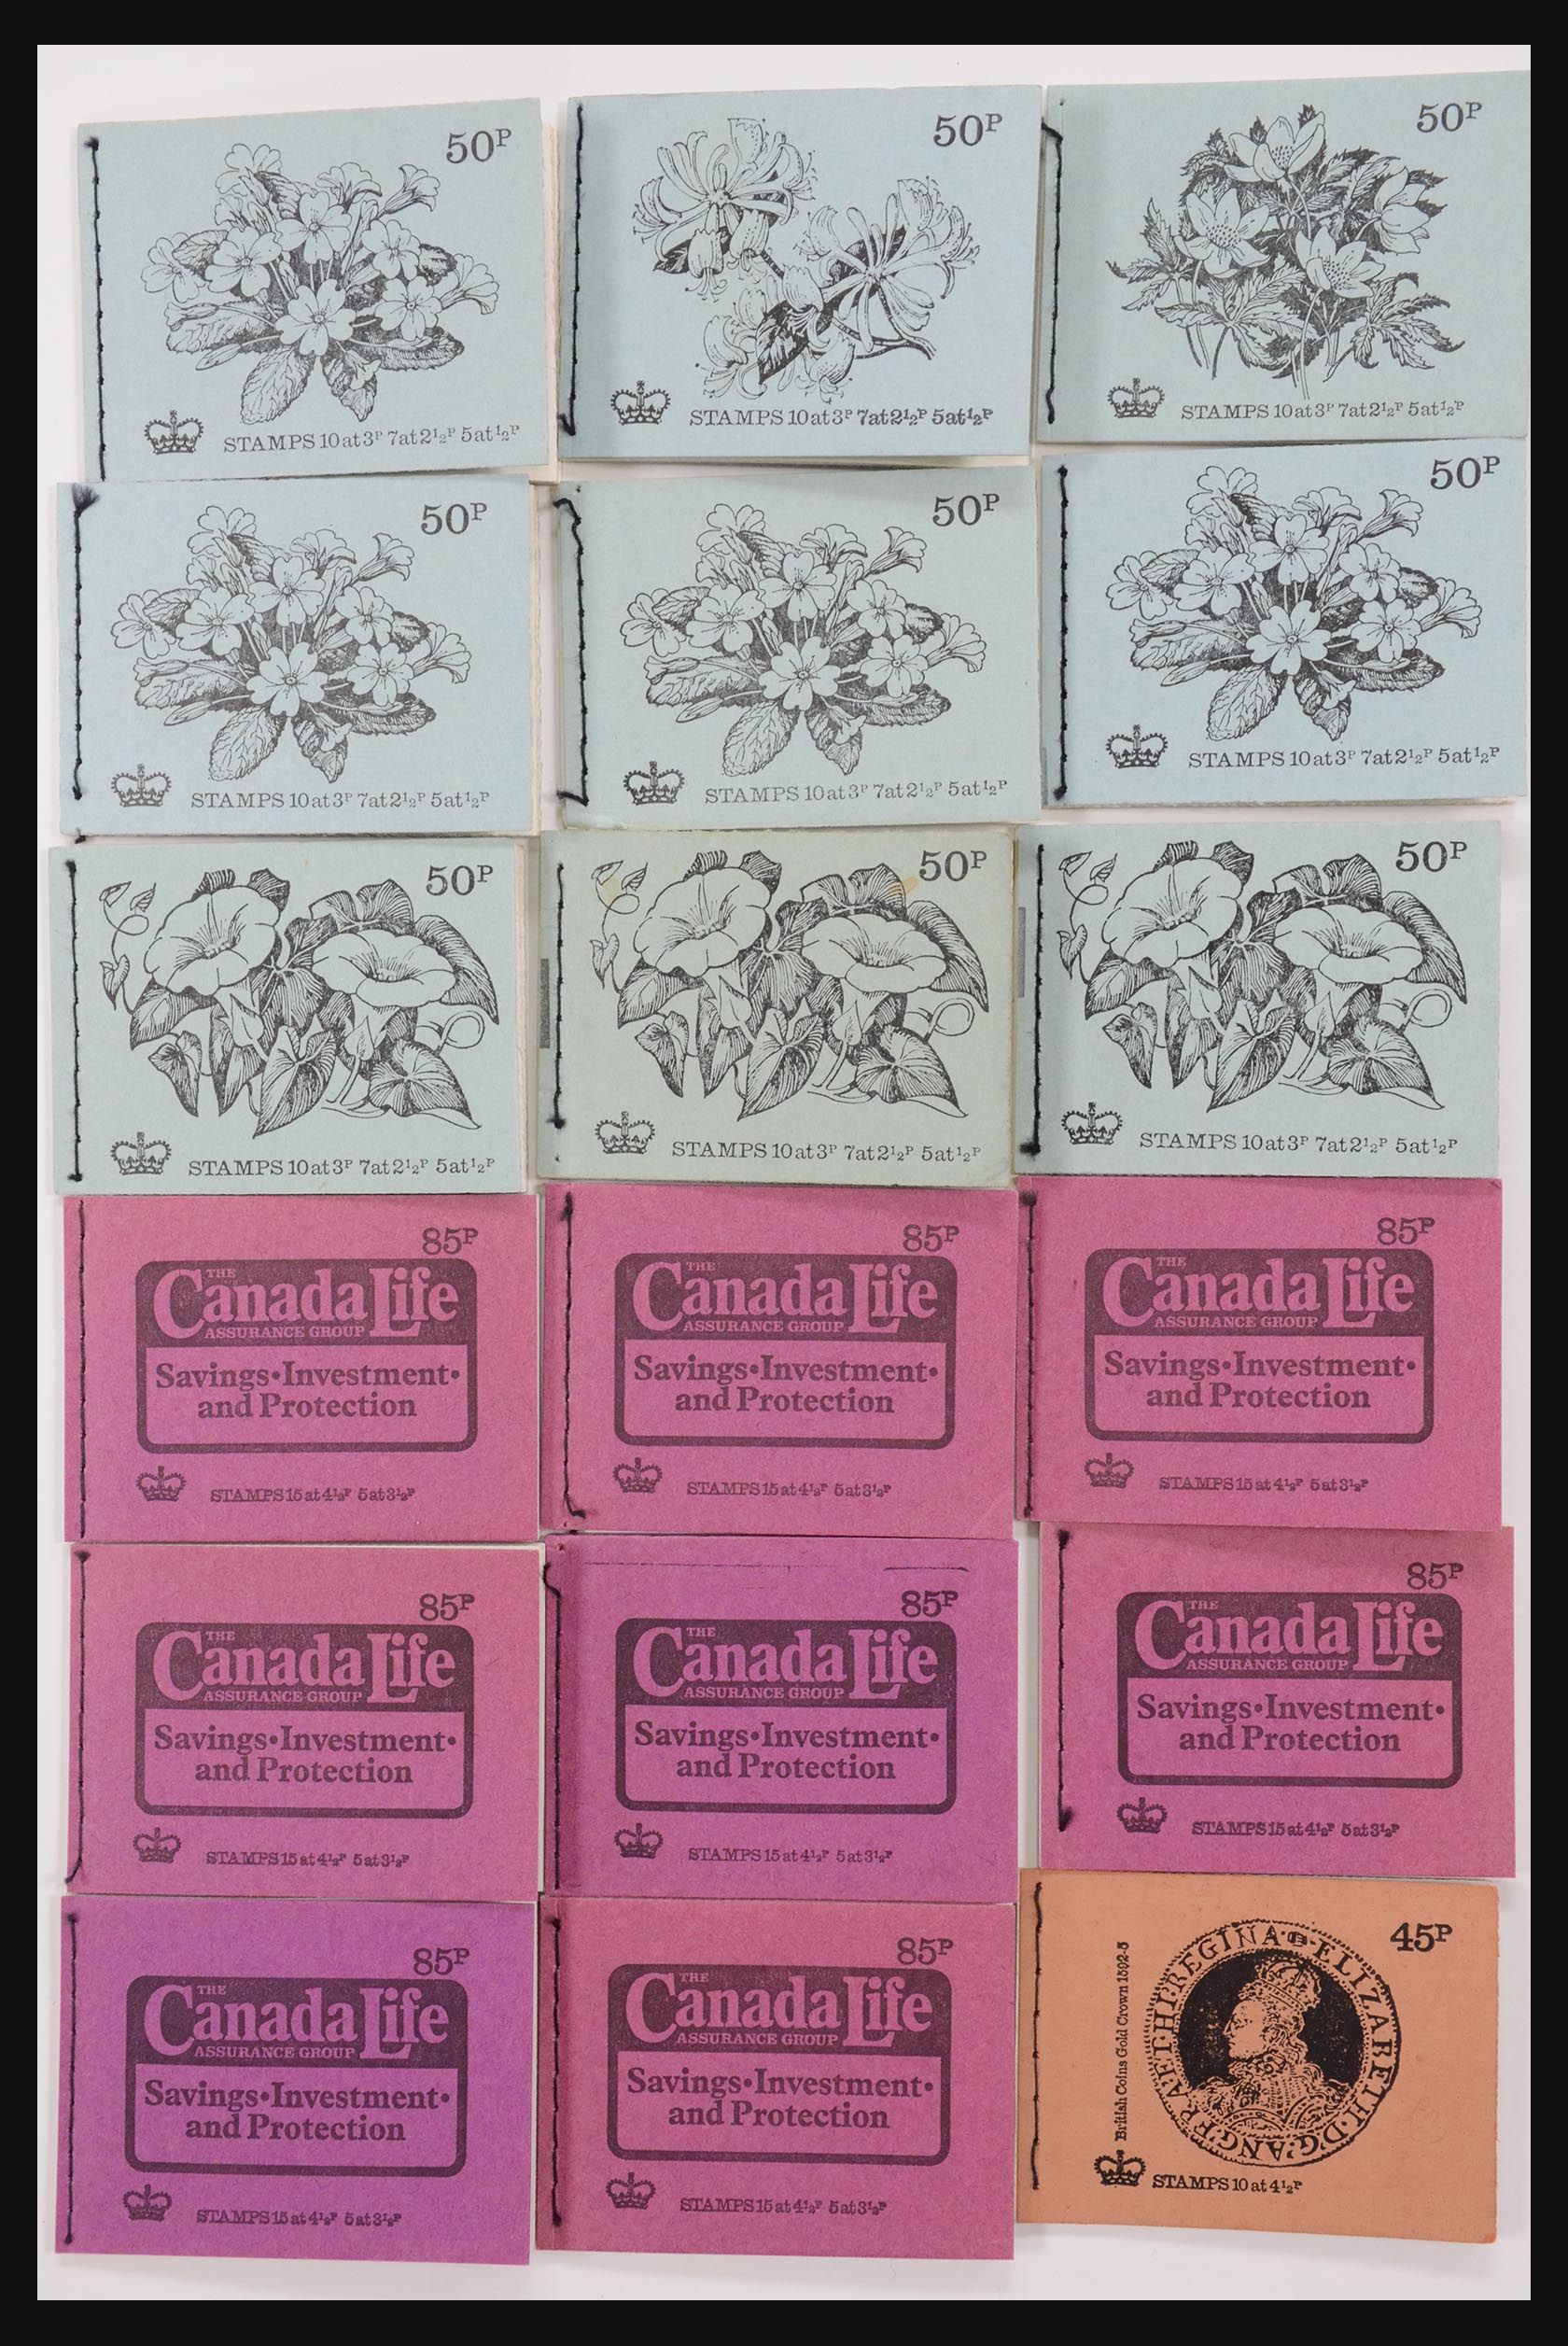 31961 003 - 31961 Great Britain stampbooklets 1971-1999.